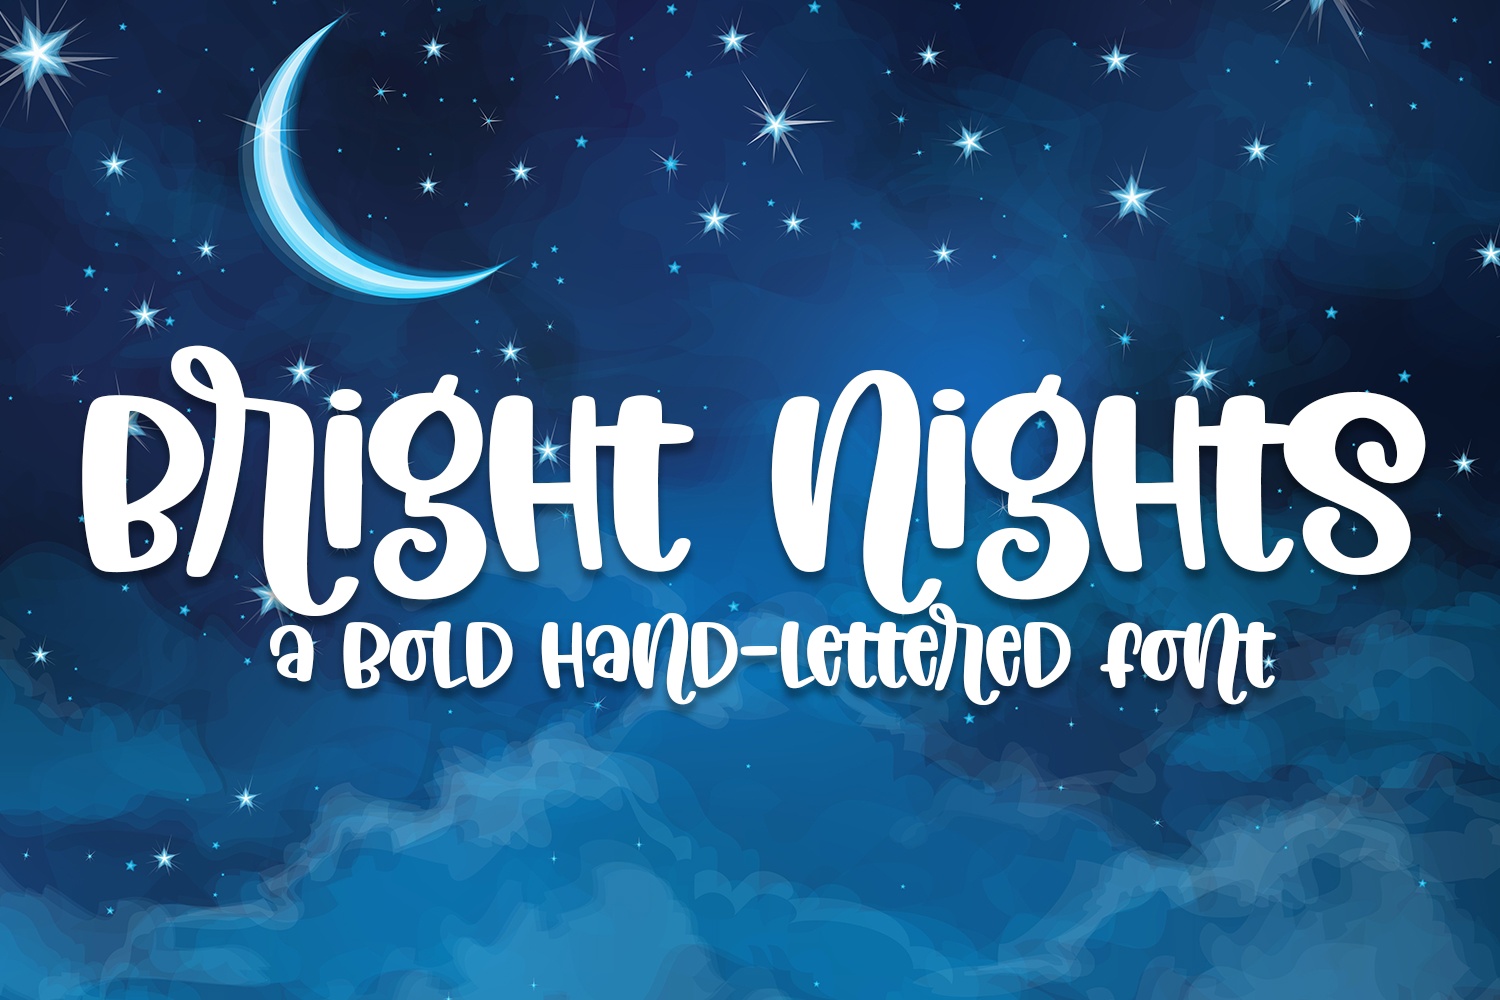 Font Bright Nights